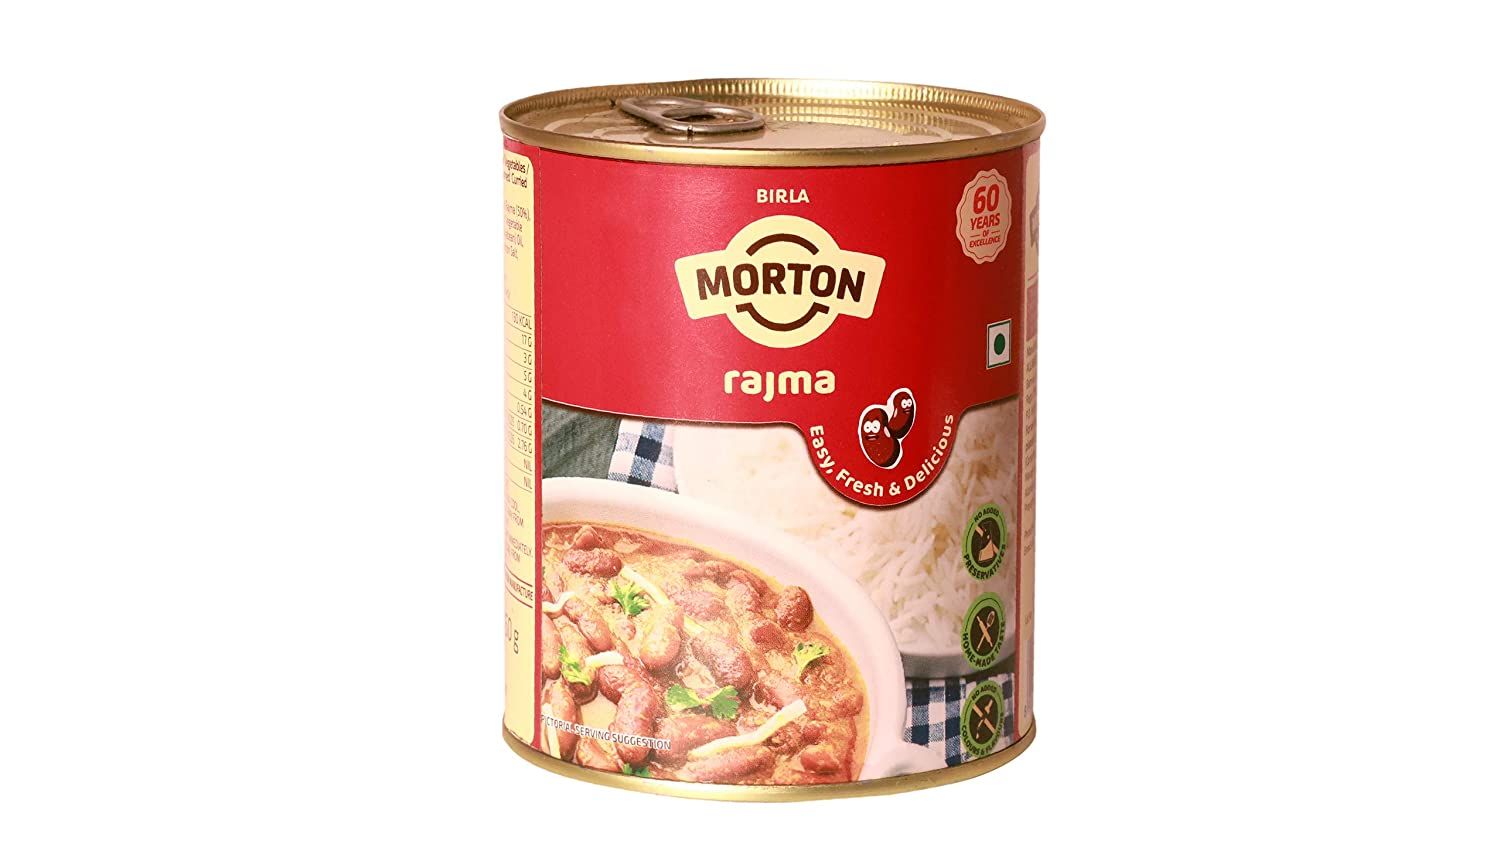 Morton Ready to Eat Rajma Image